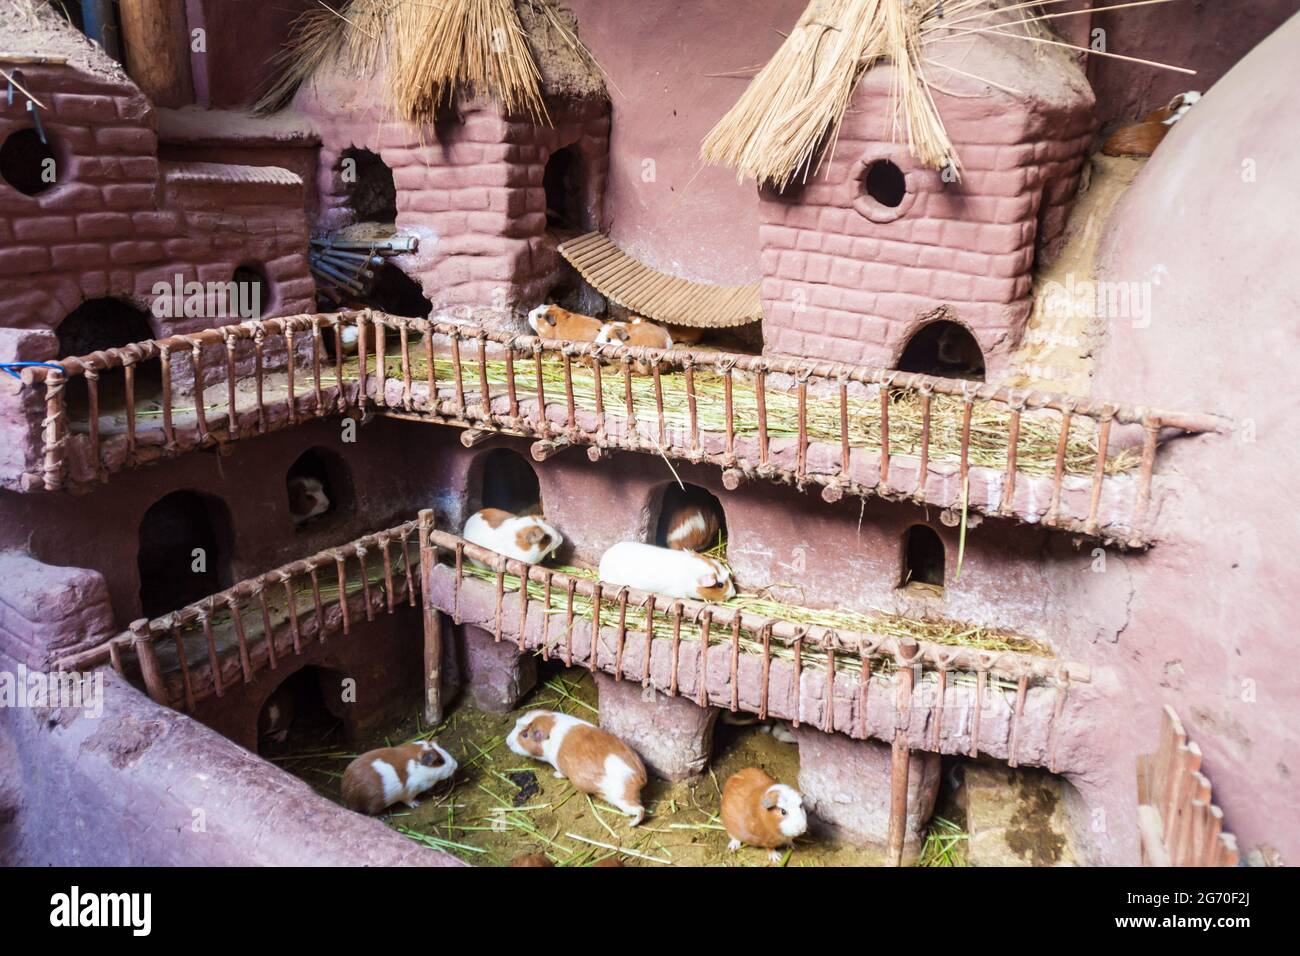 Castillo de Cuyes (Guinea pig house) in Pisac village, Peru Stock Photo